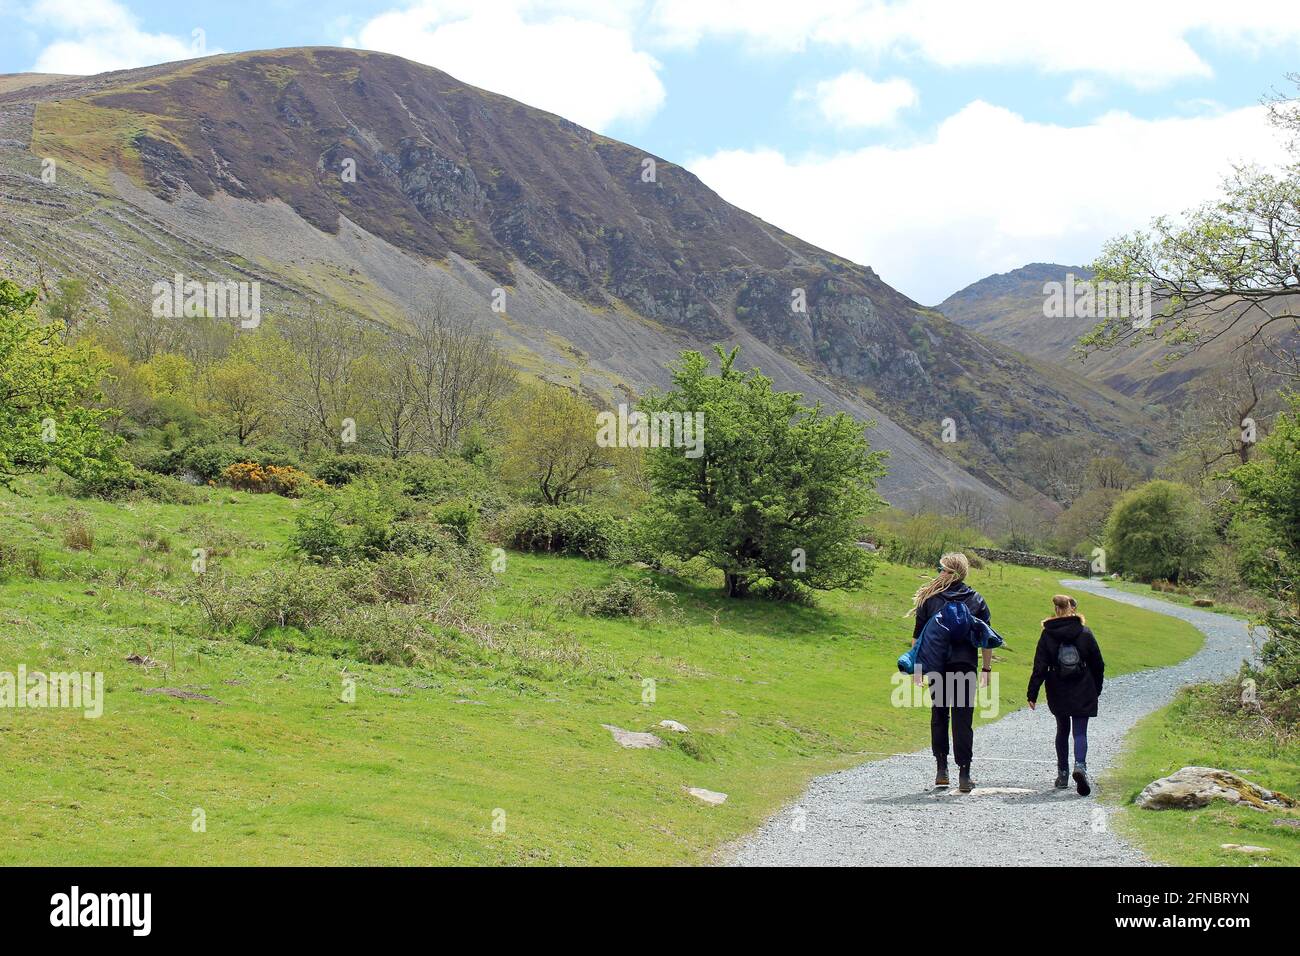 Caminantes en el sendero que conduce a Aber Falls, Coedydd Aber National Nature Reserve, Gwynedd, Gales Foto de stock